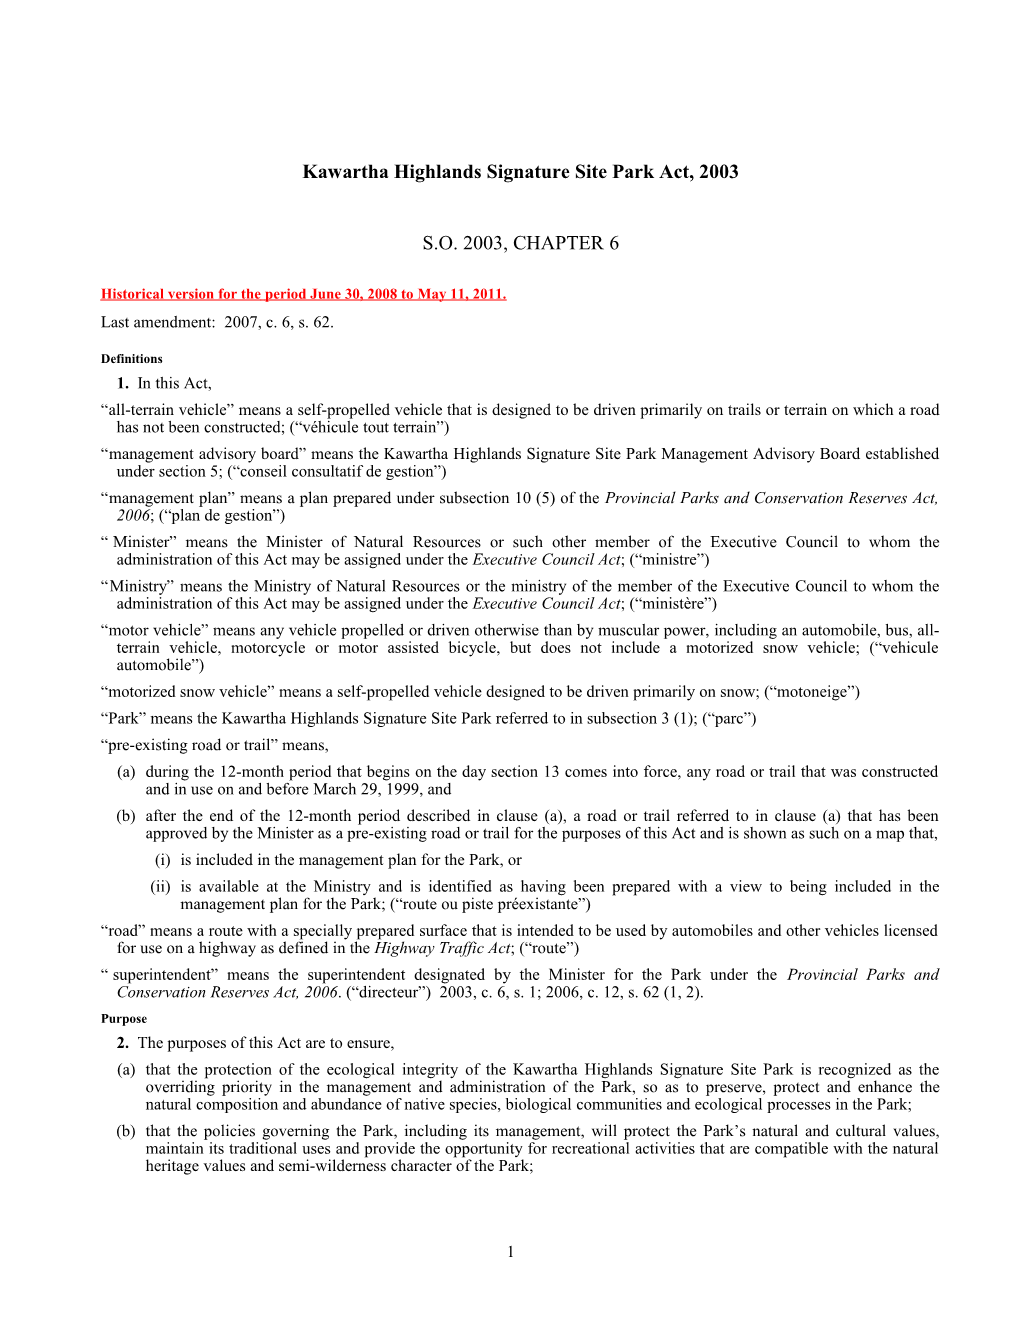 Kawartha Highlands Signature Site Park Act, 2003, S.O. 2003, C. 6